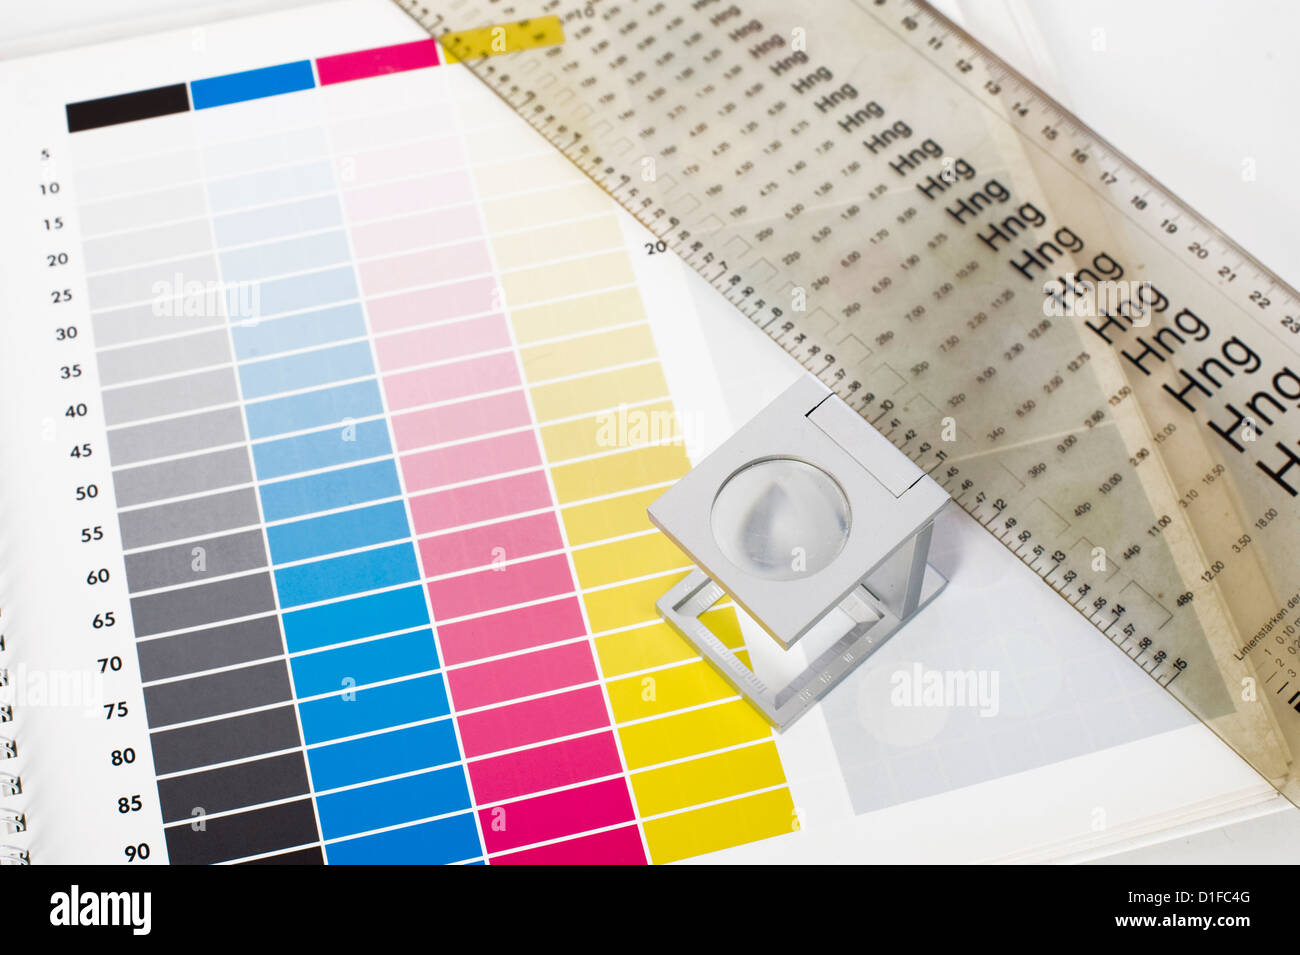 Typometer stock image. Image of colour, cmyk, press, advertising - 2761579